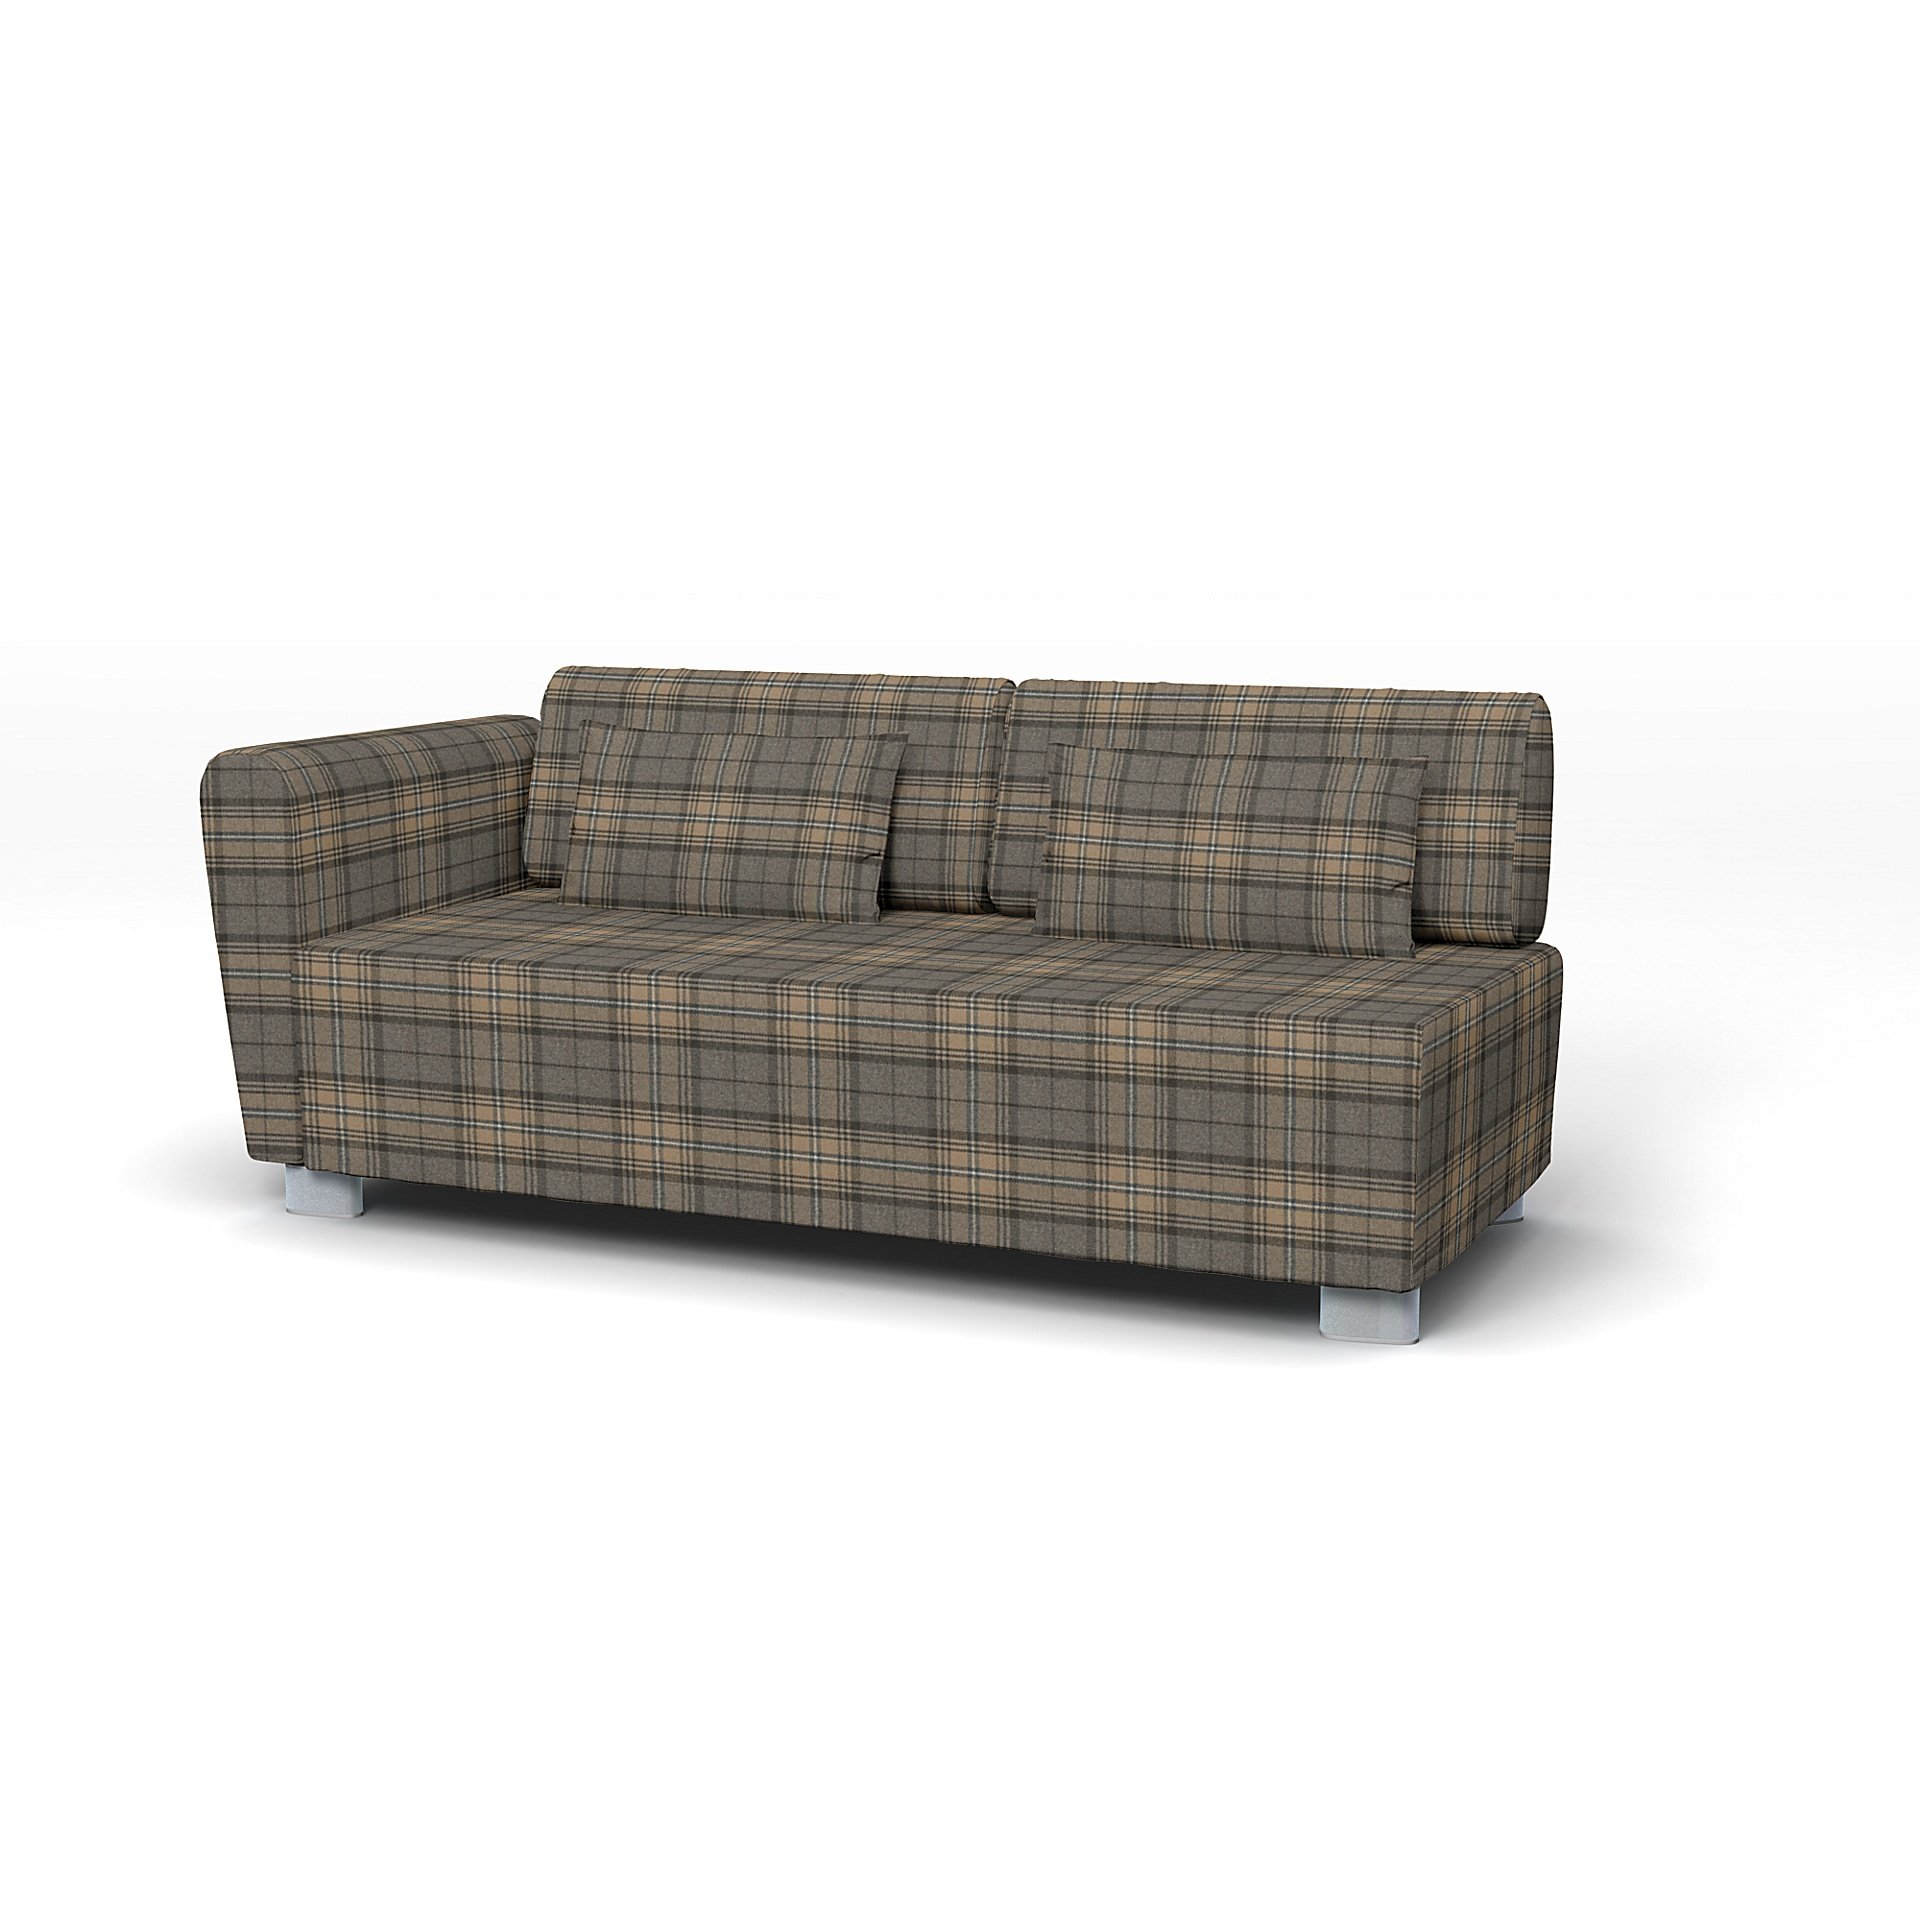 IKEA - Mysinge 2 Seater Sofa with Armrest Cover, Bark Brown, Wool - Bemz